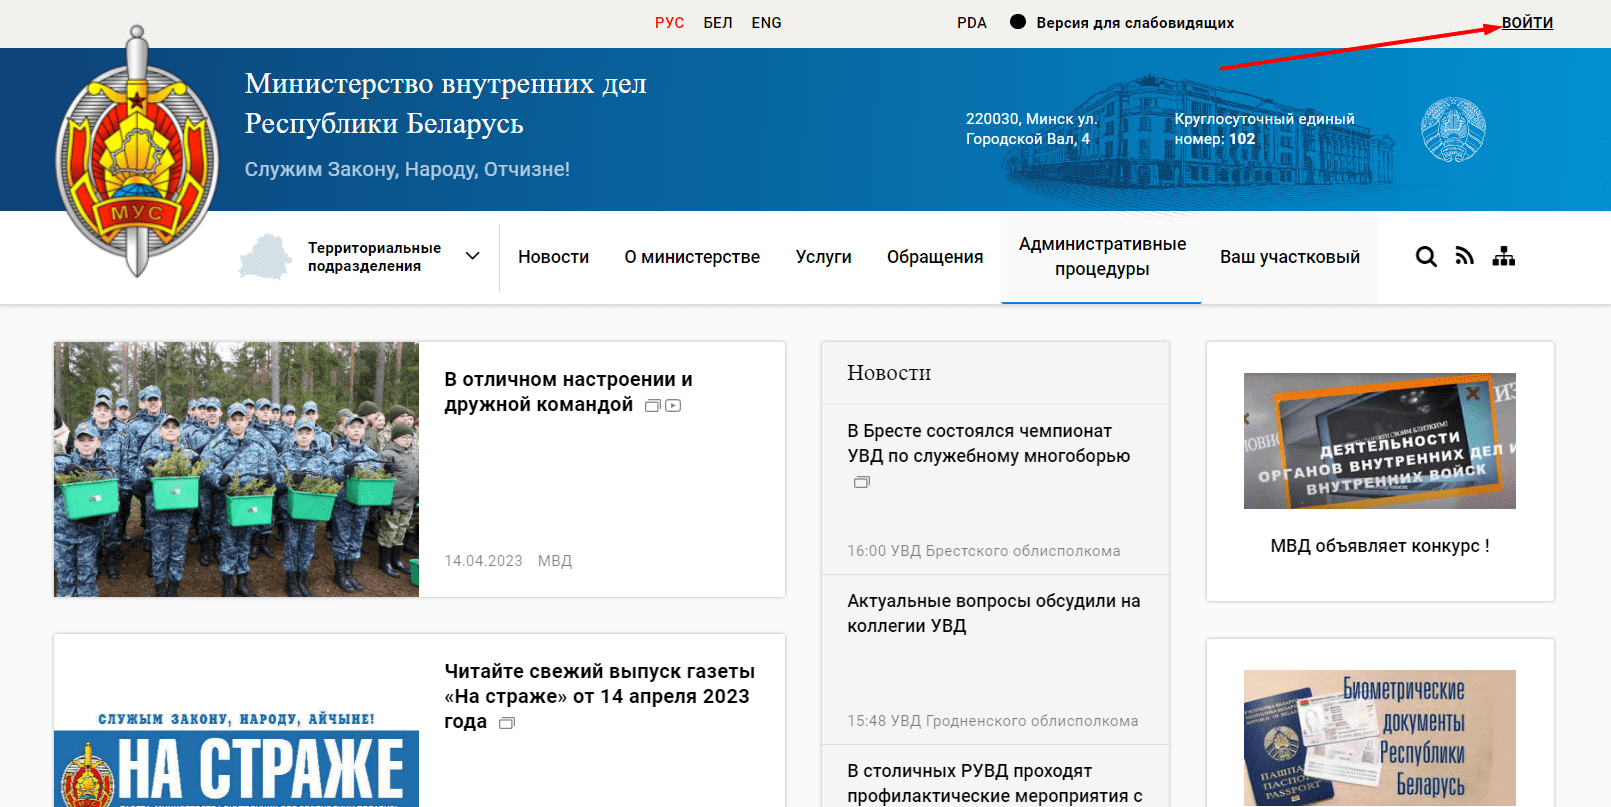 Министерство внутренних дел Республики Беларусь (mvd.gov.by)